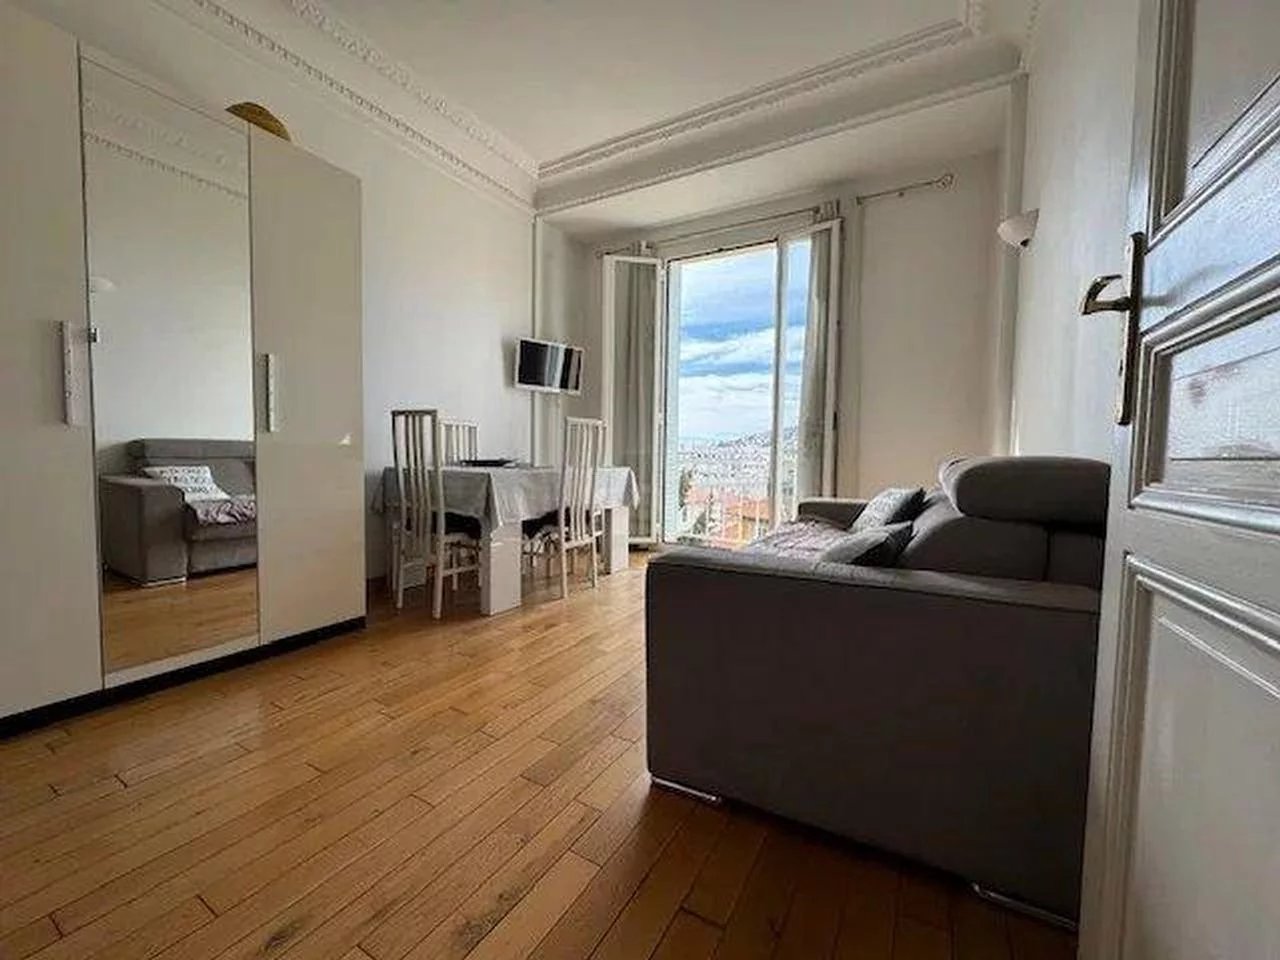 Appartement  2 Locali 30m2  In vendita   235 000 €